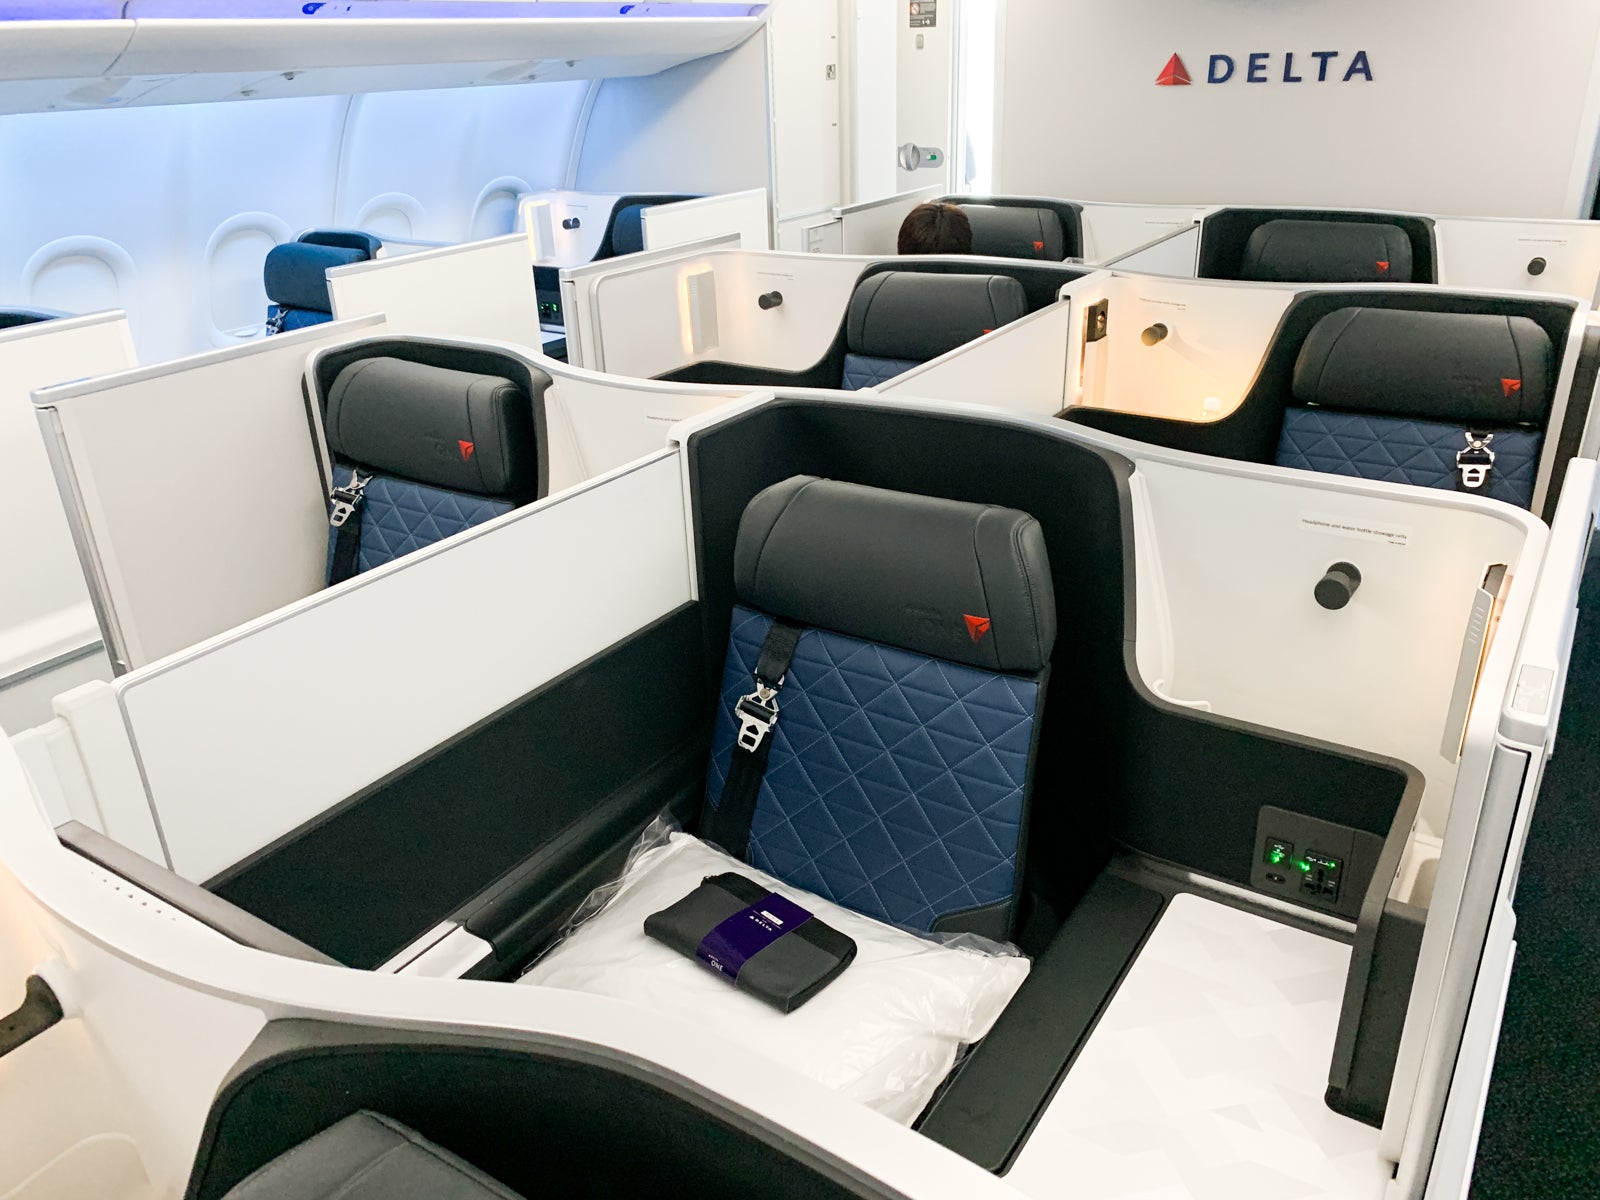 Delta A330-900neo business class